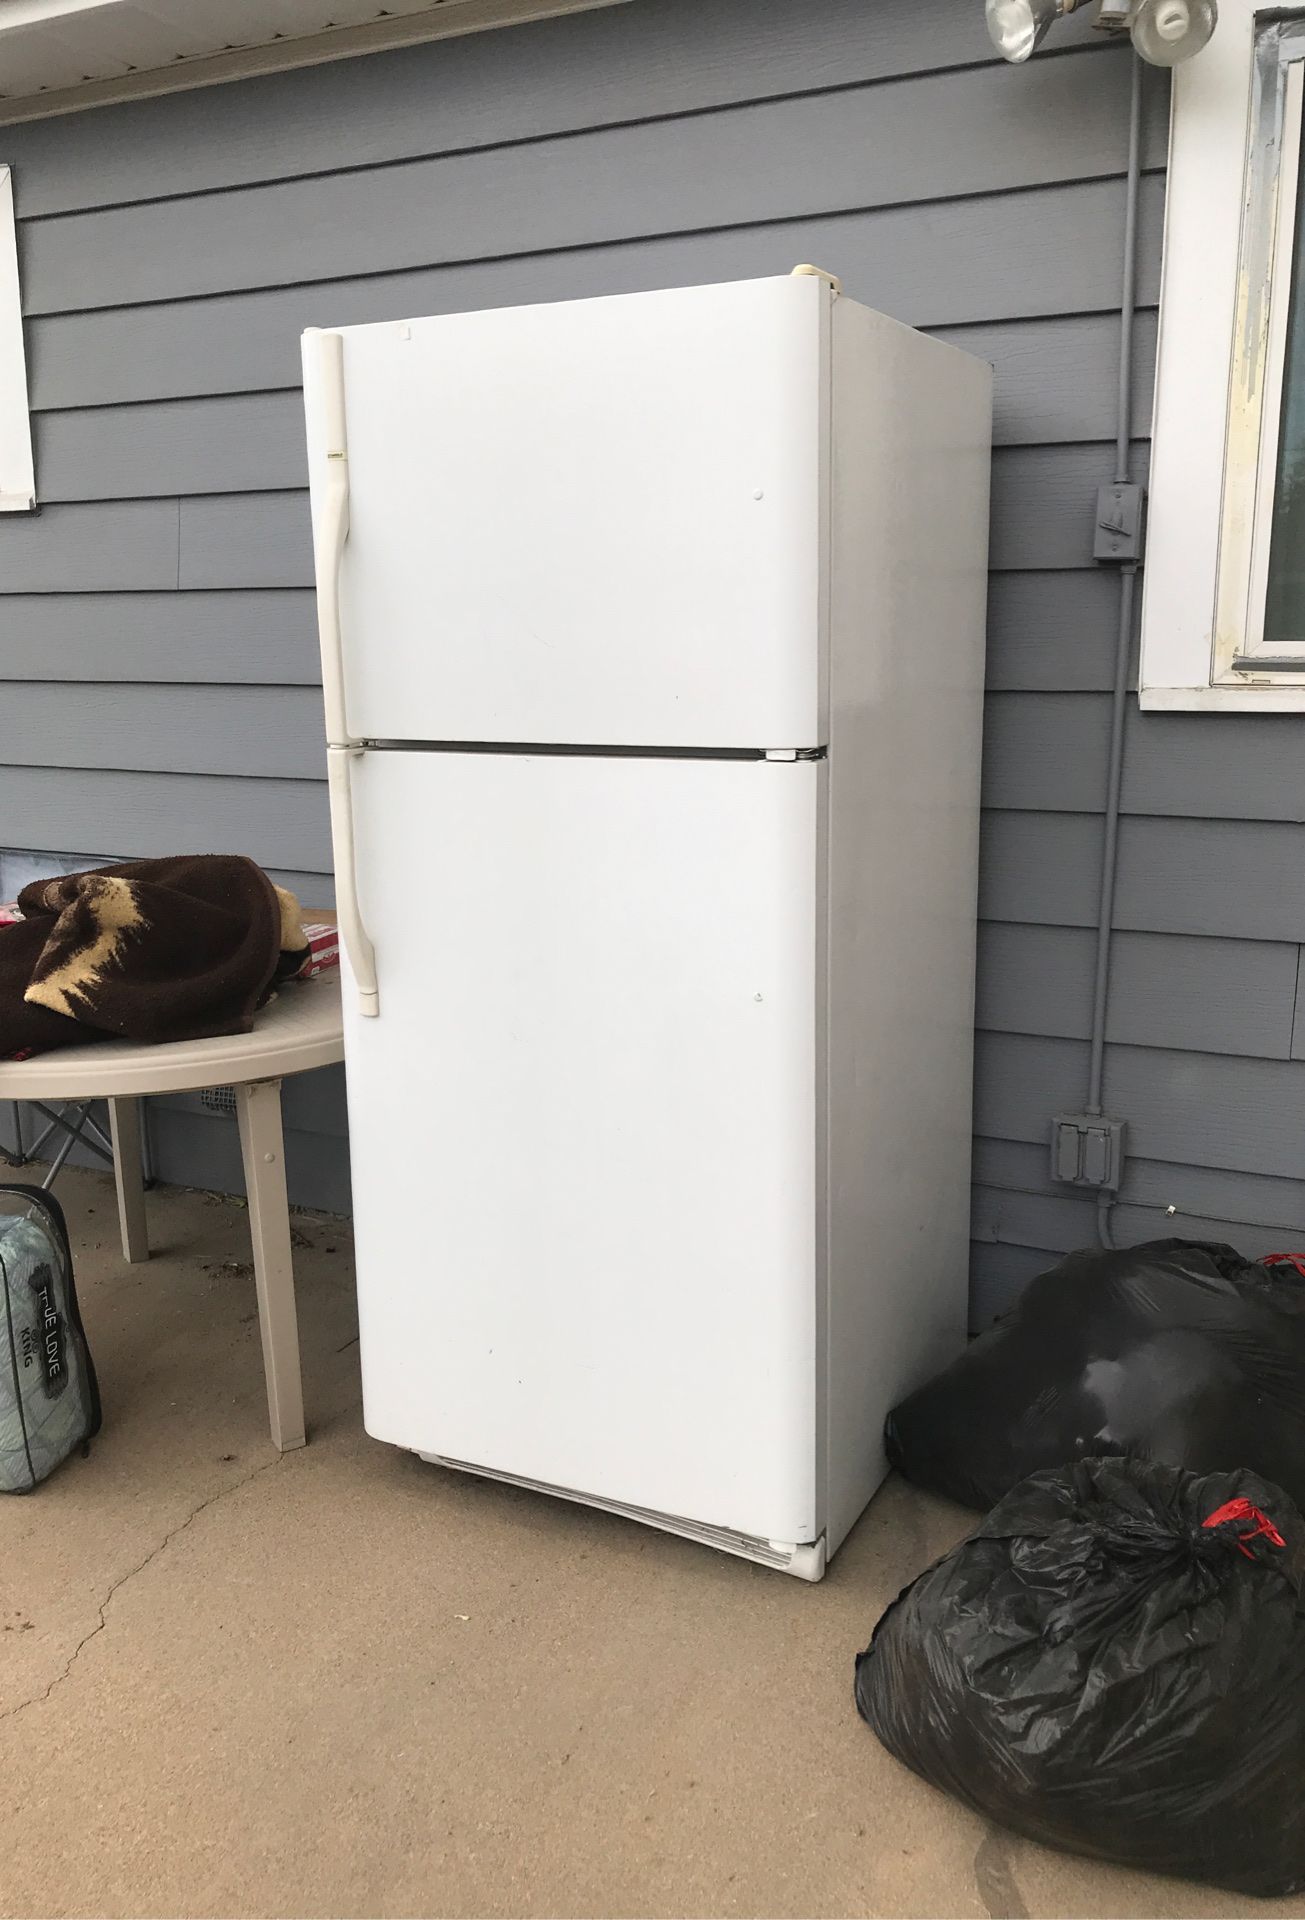 Free fridge for scrap